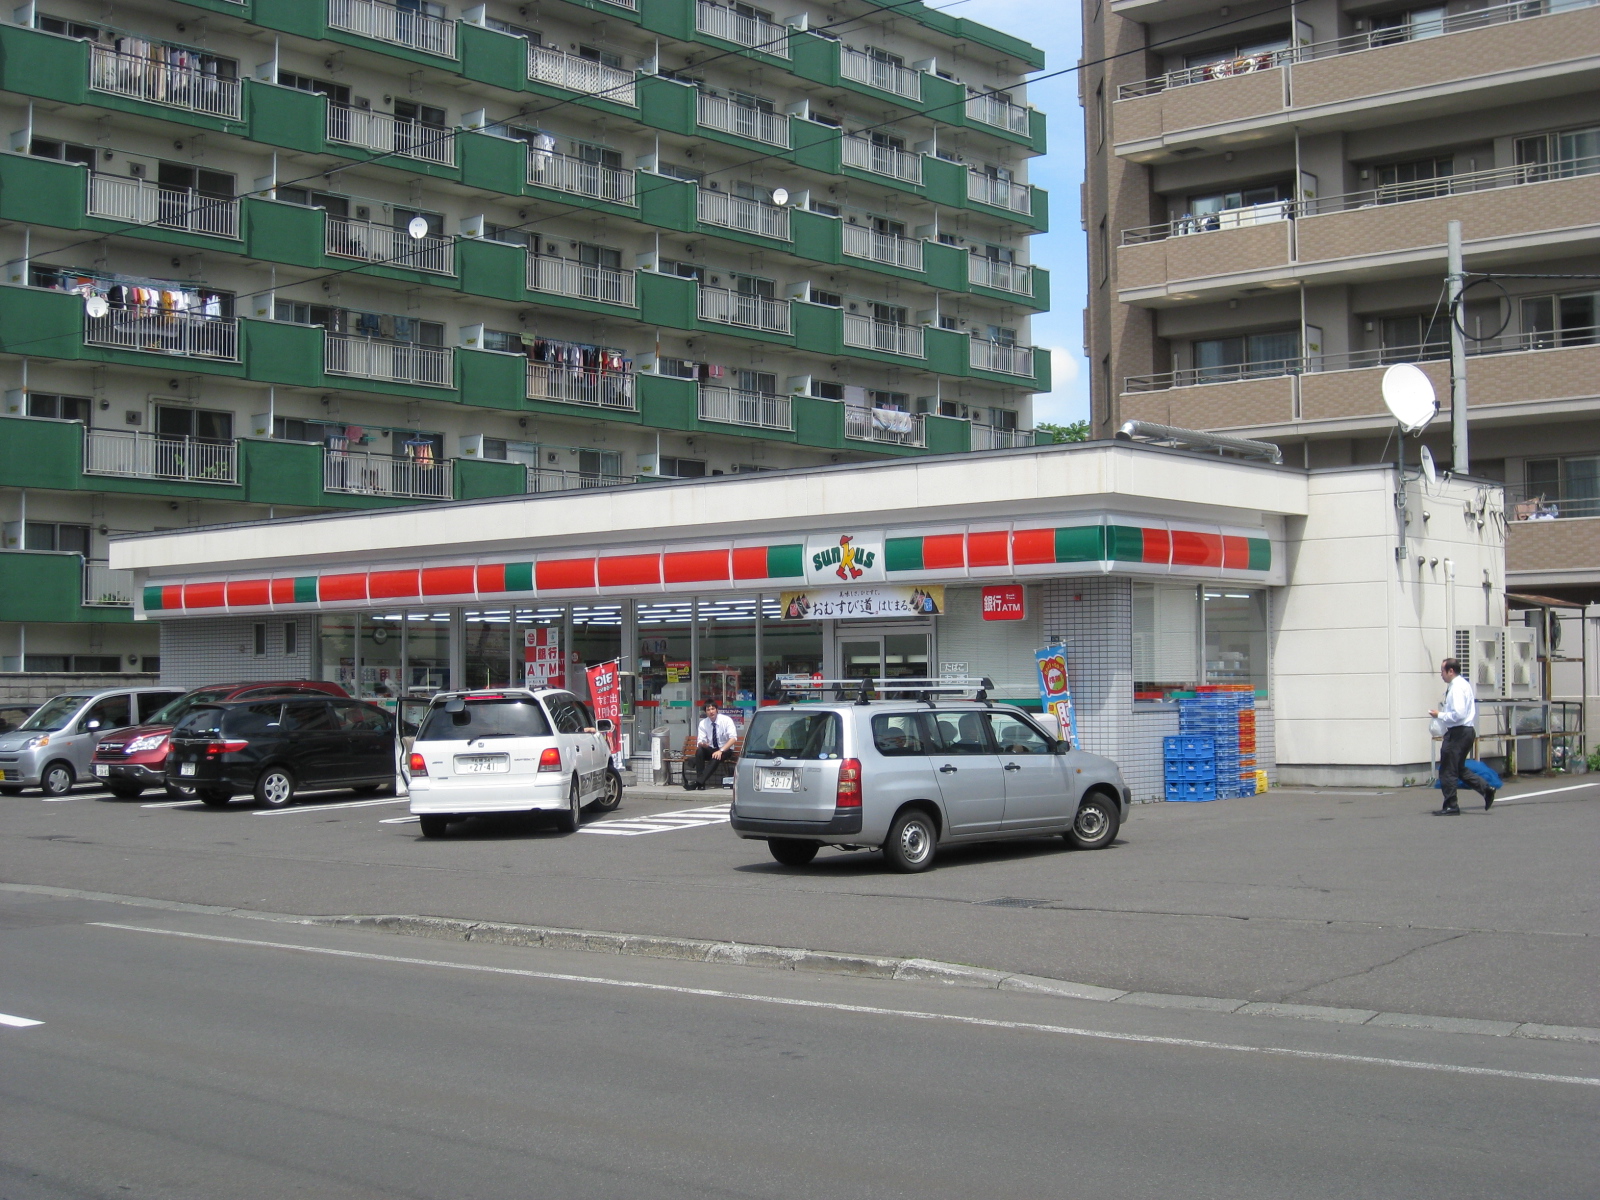 Convenience store. Thanks to the North 10 Johigashiten (convenience store) 280m